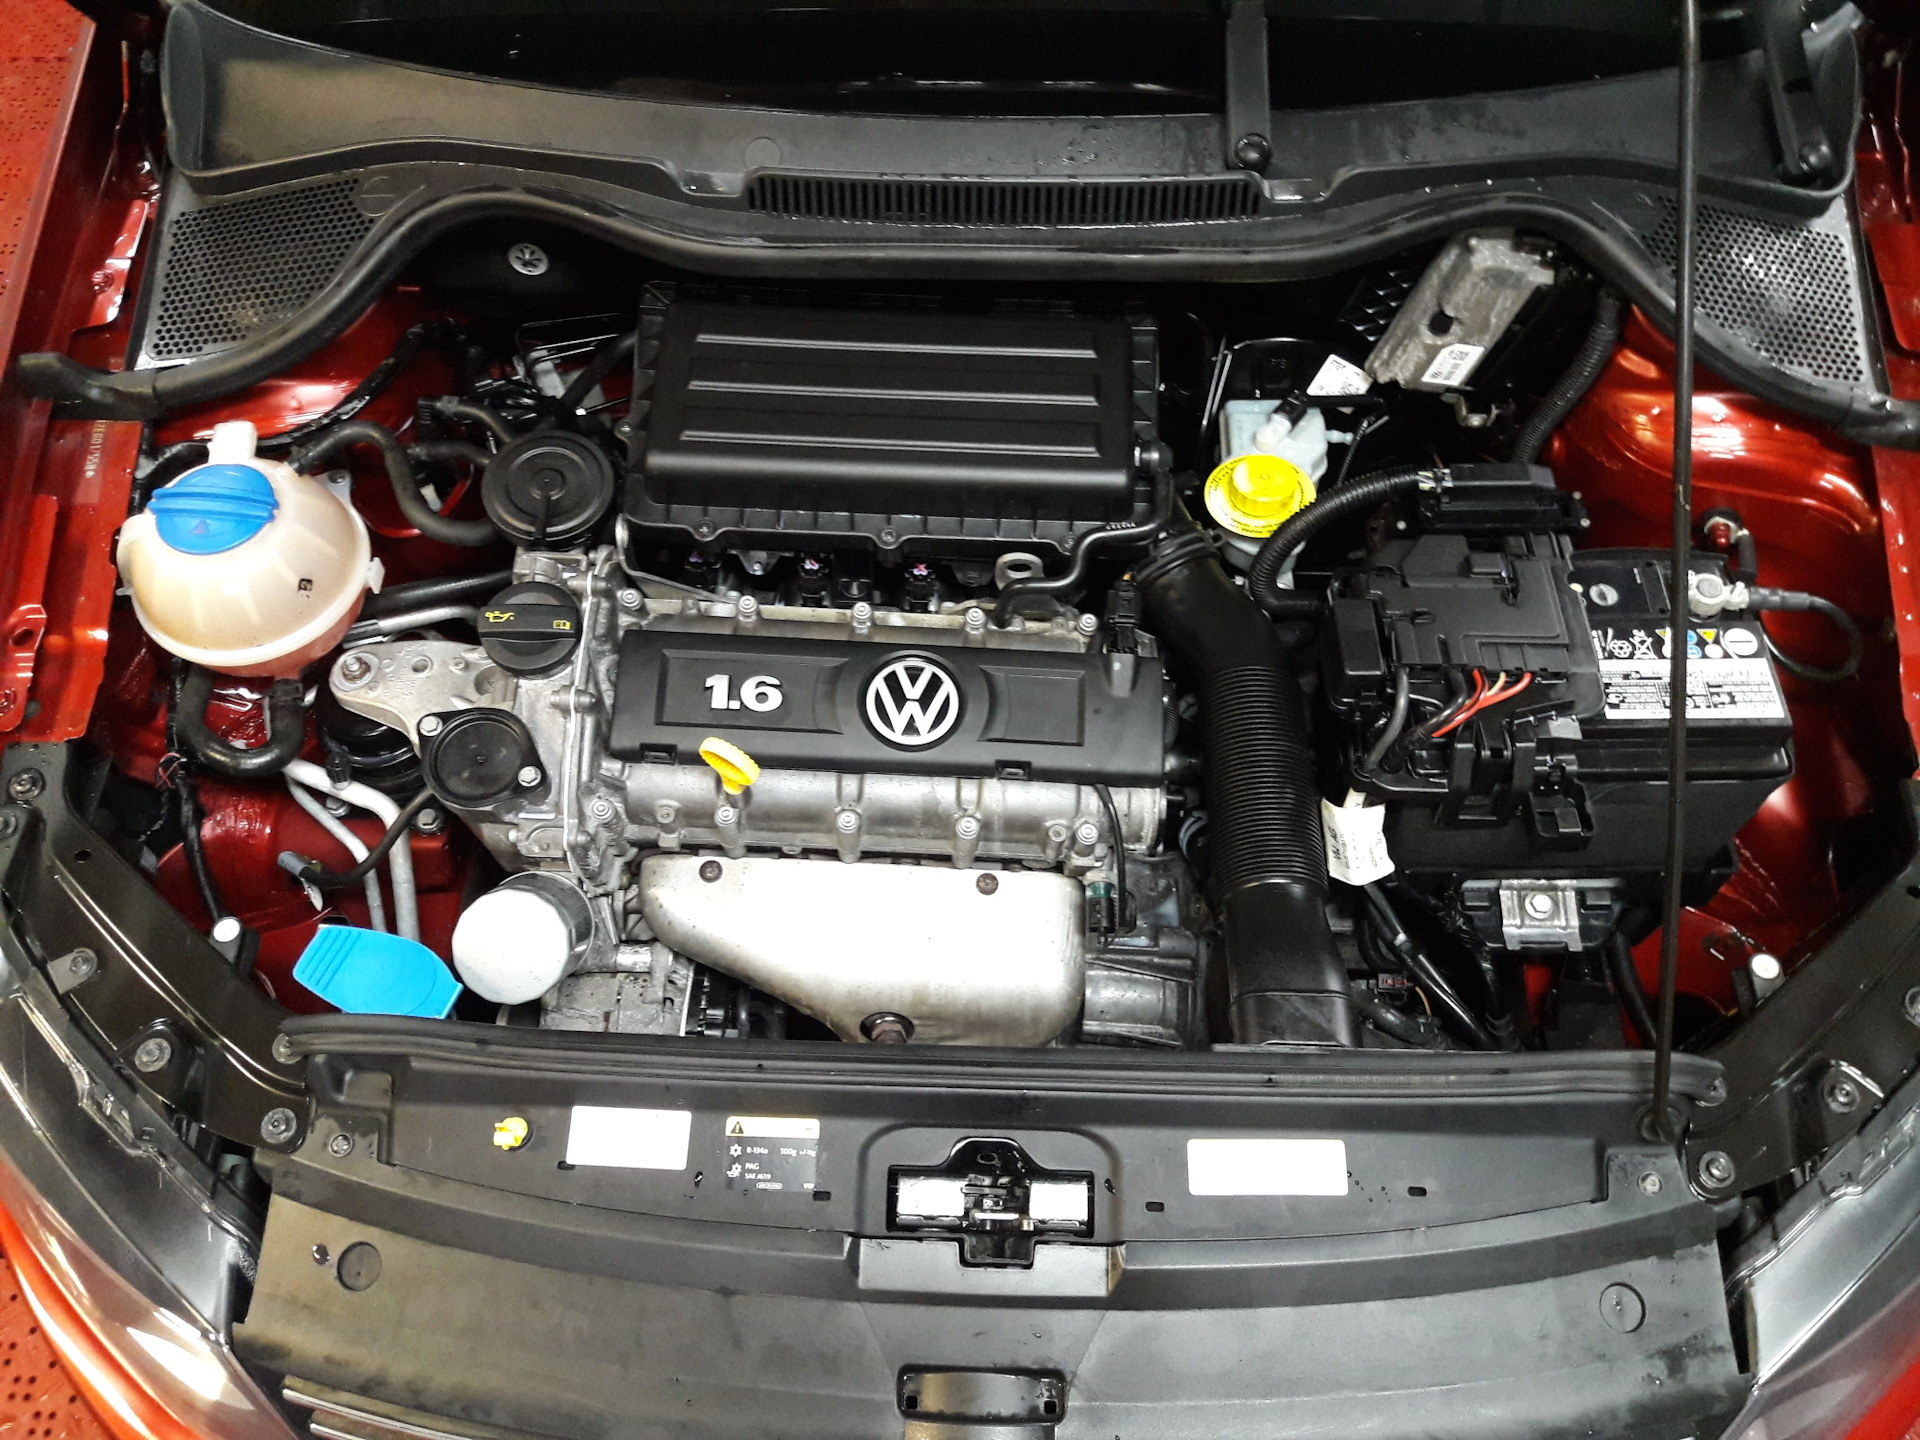 Volkswagen polo мотор. Фольксваген поло 2012 мотор. Двигатель Фольксваген поло седан 1.6. Мотор Фольксваген поло 1,2. Двигатель Фольксваген поло седан 2012.